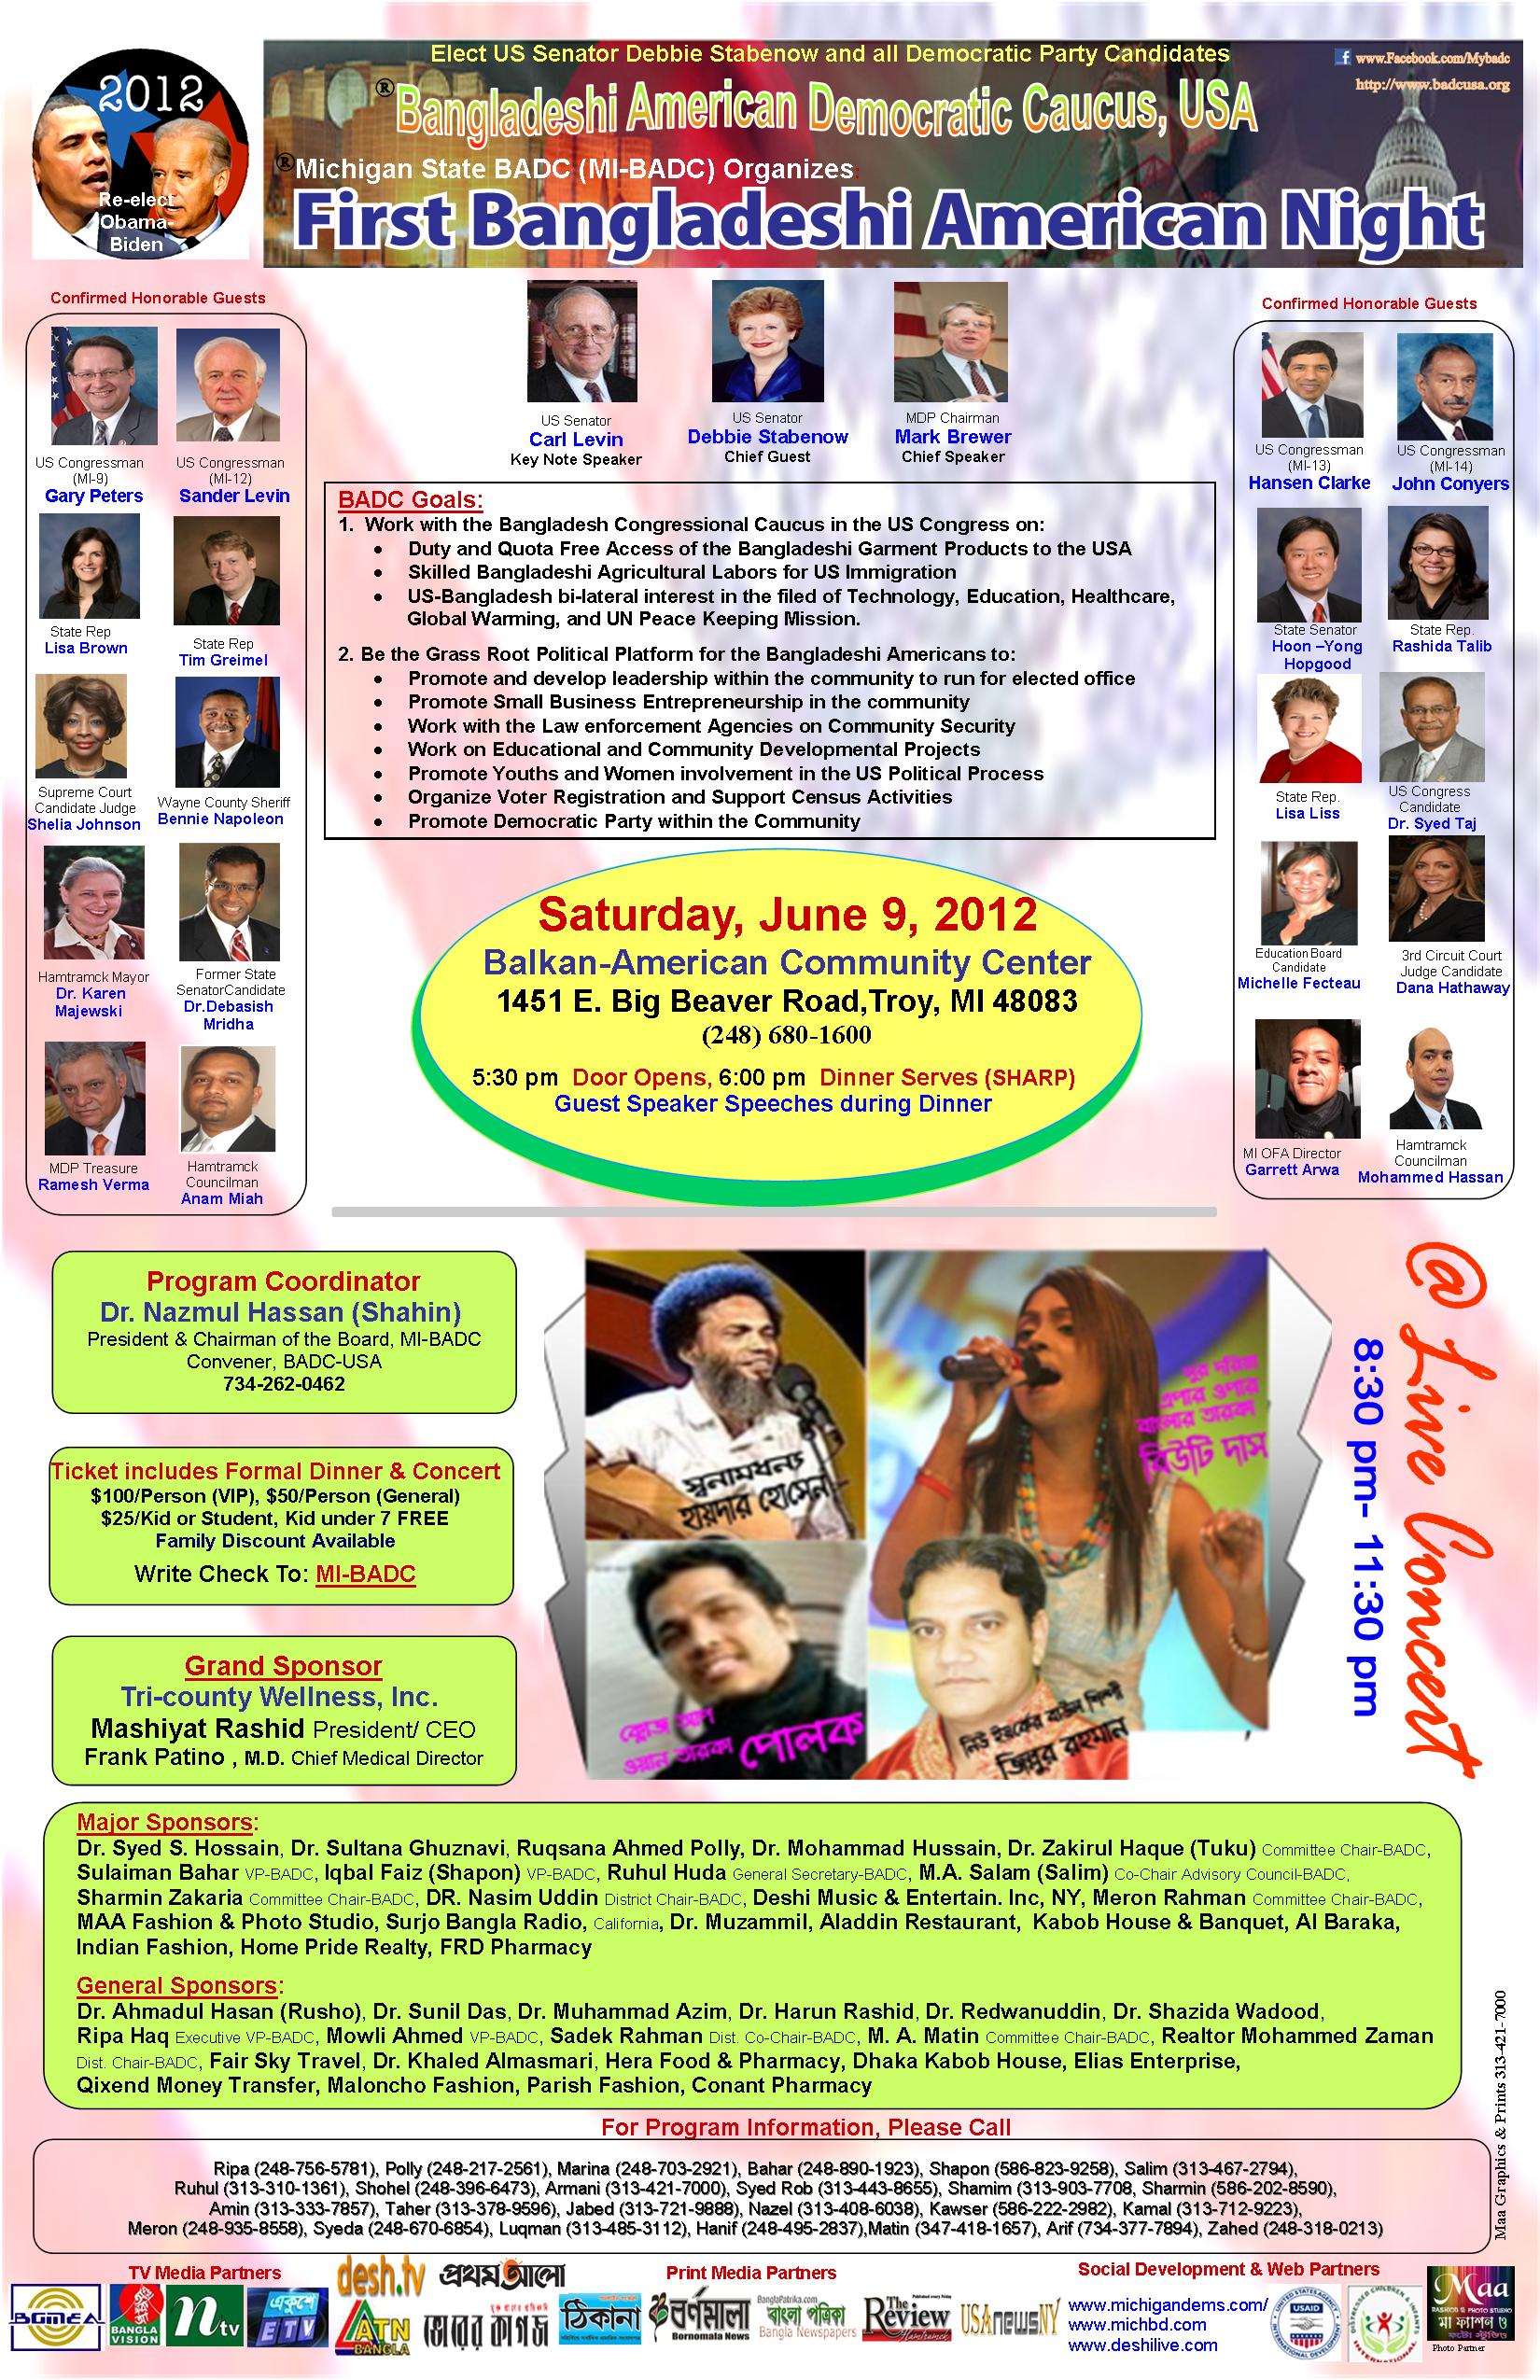 First Bangladeshi American Night by BADC (Saturday, June 9, 2012)